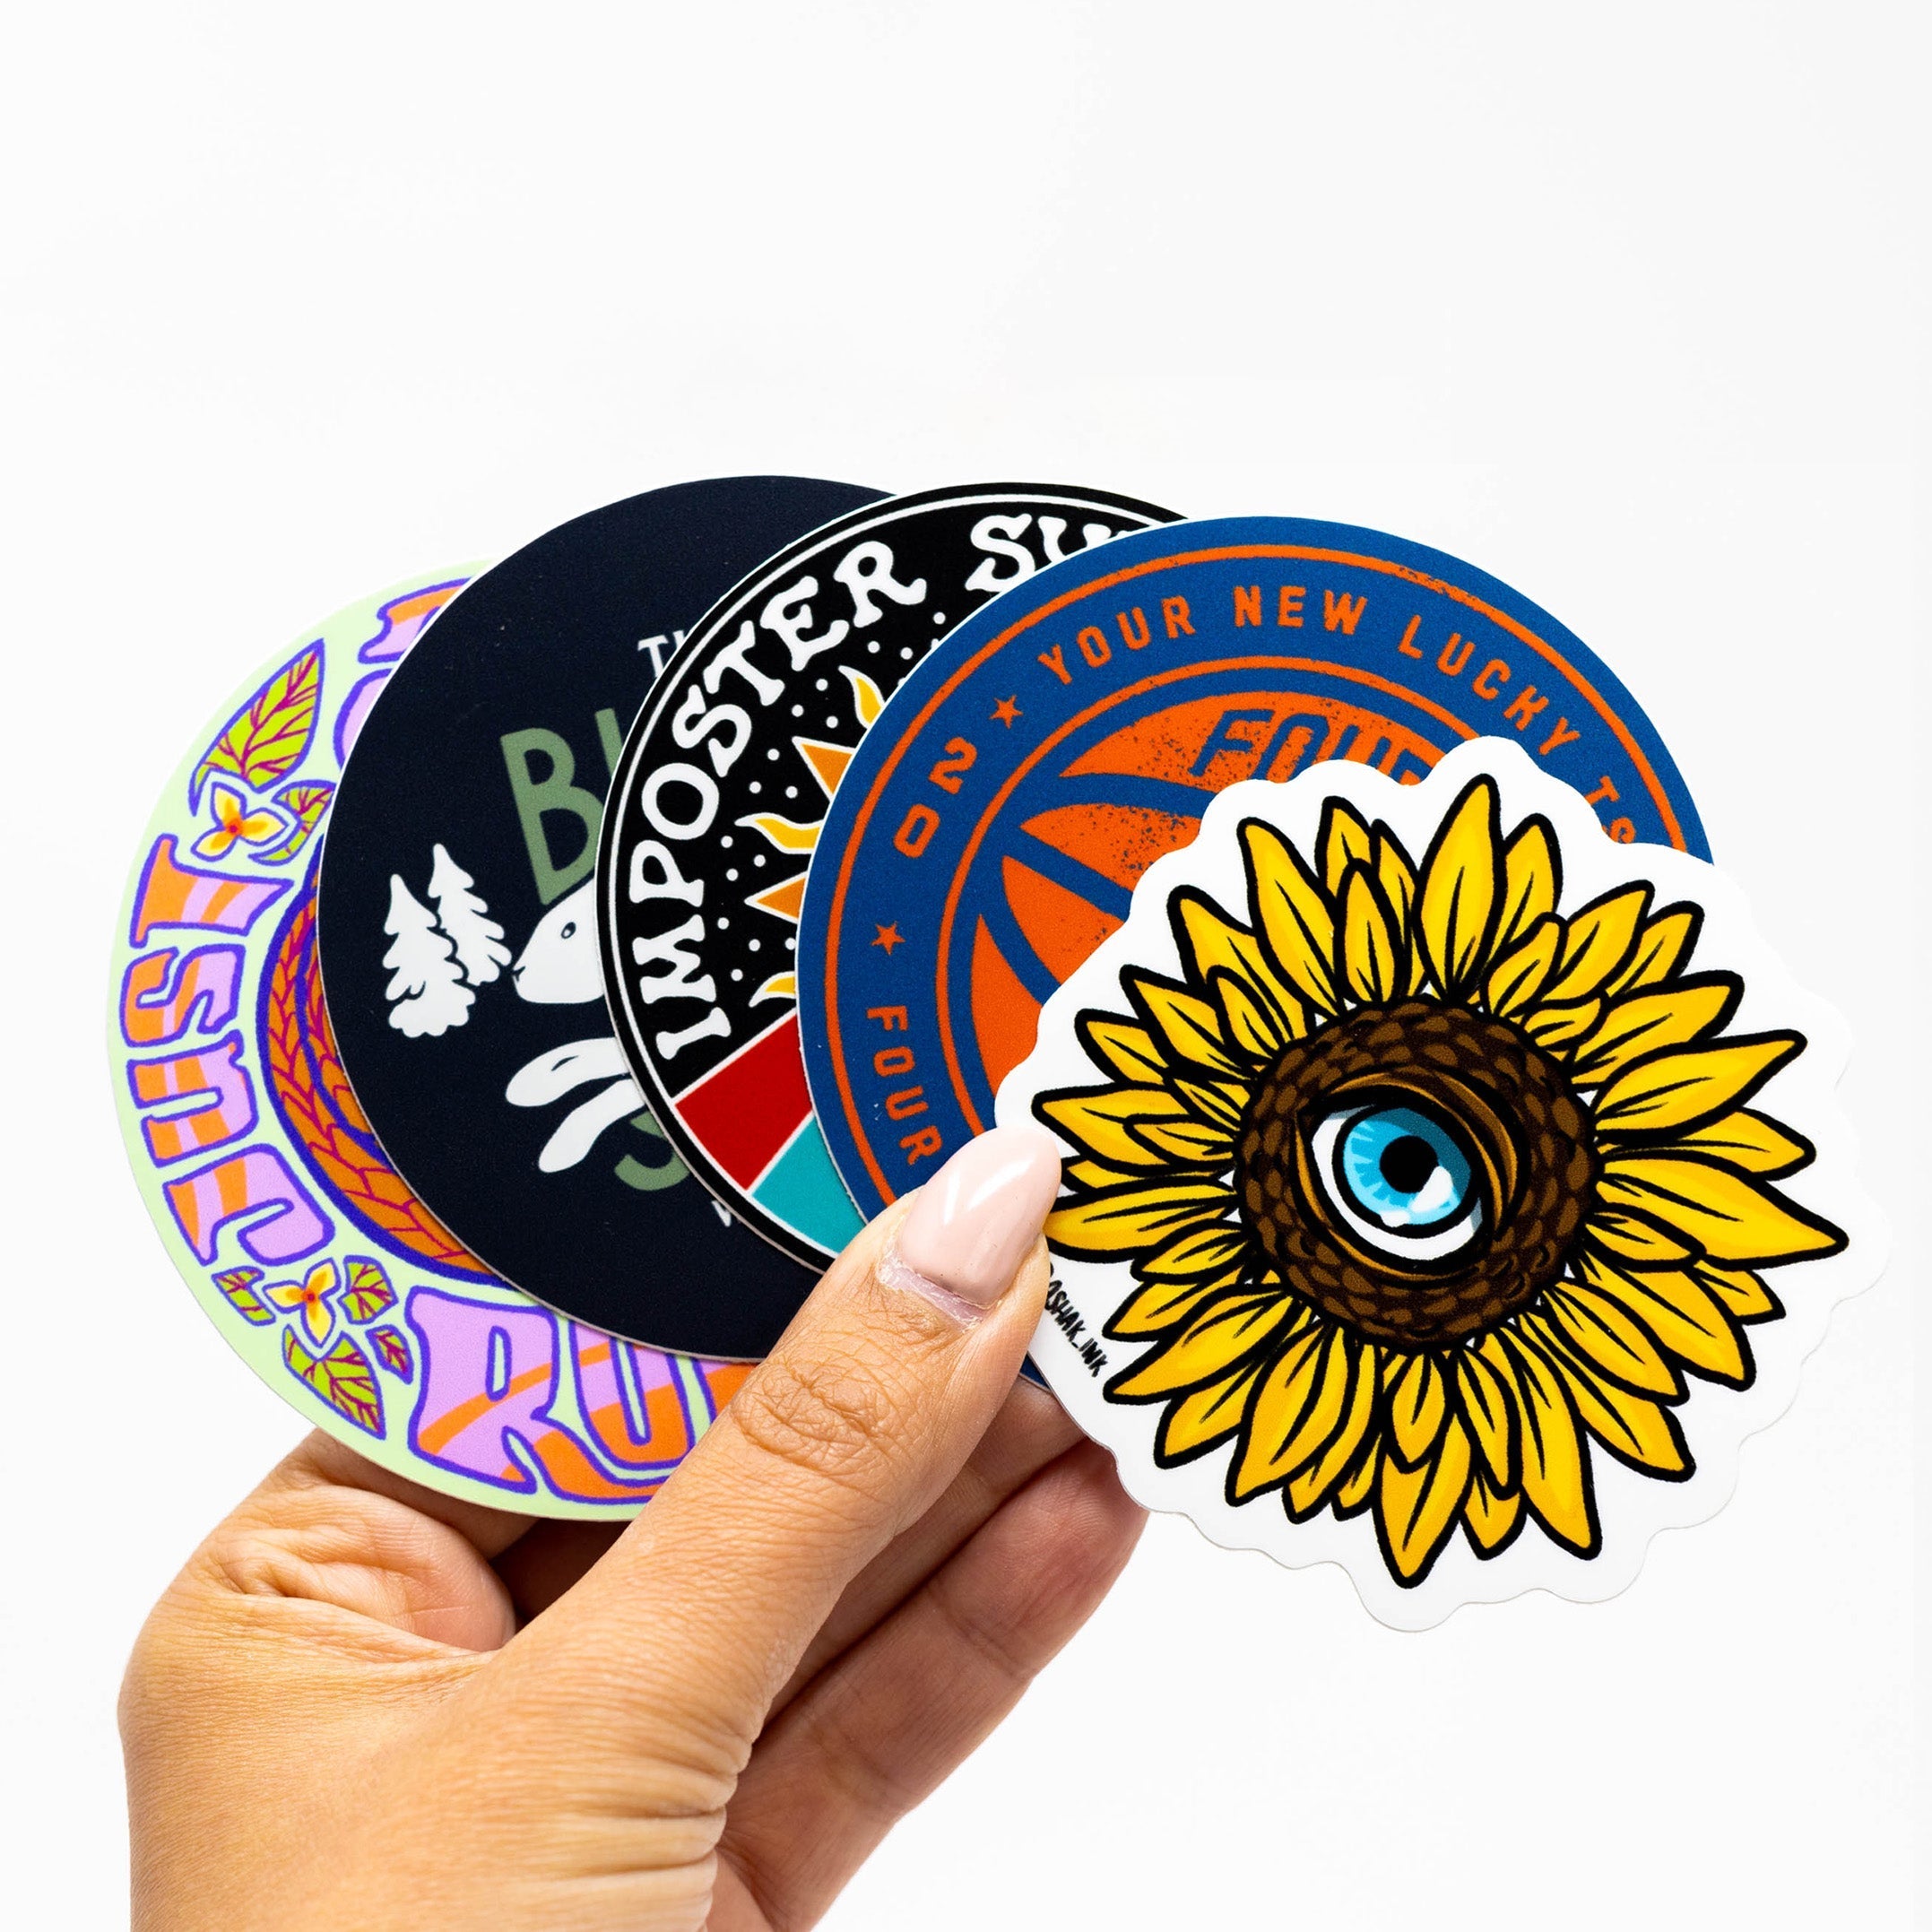 Sticky Brand Custom Vinyl Stickers Sunflower Bunny Basketball 100 for $25 in Hand Yellow Blue Brown Black